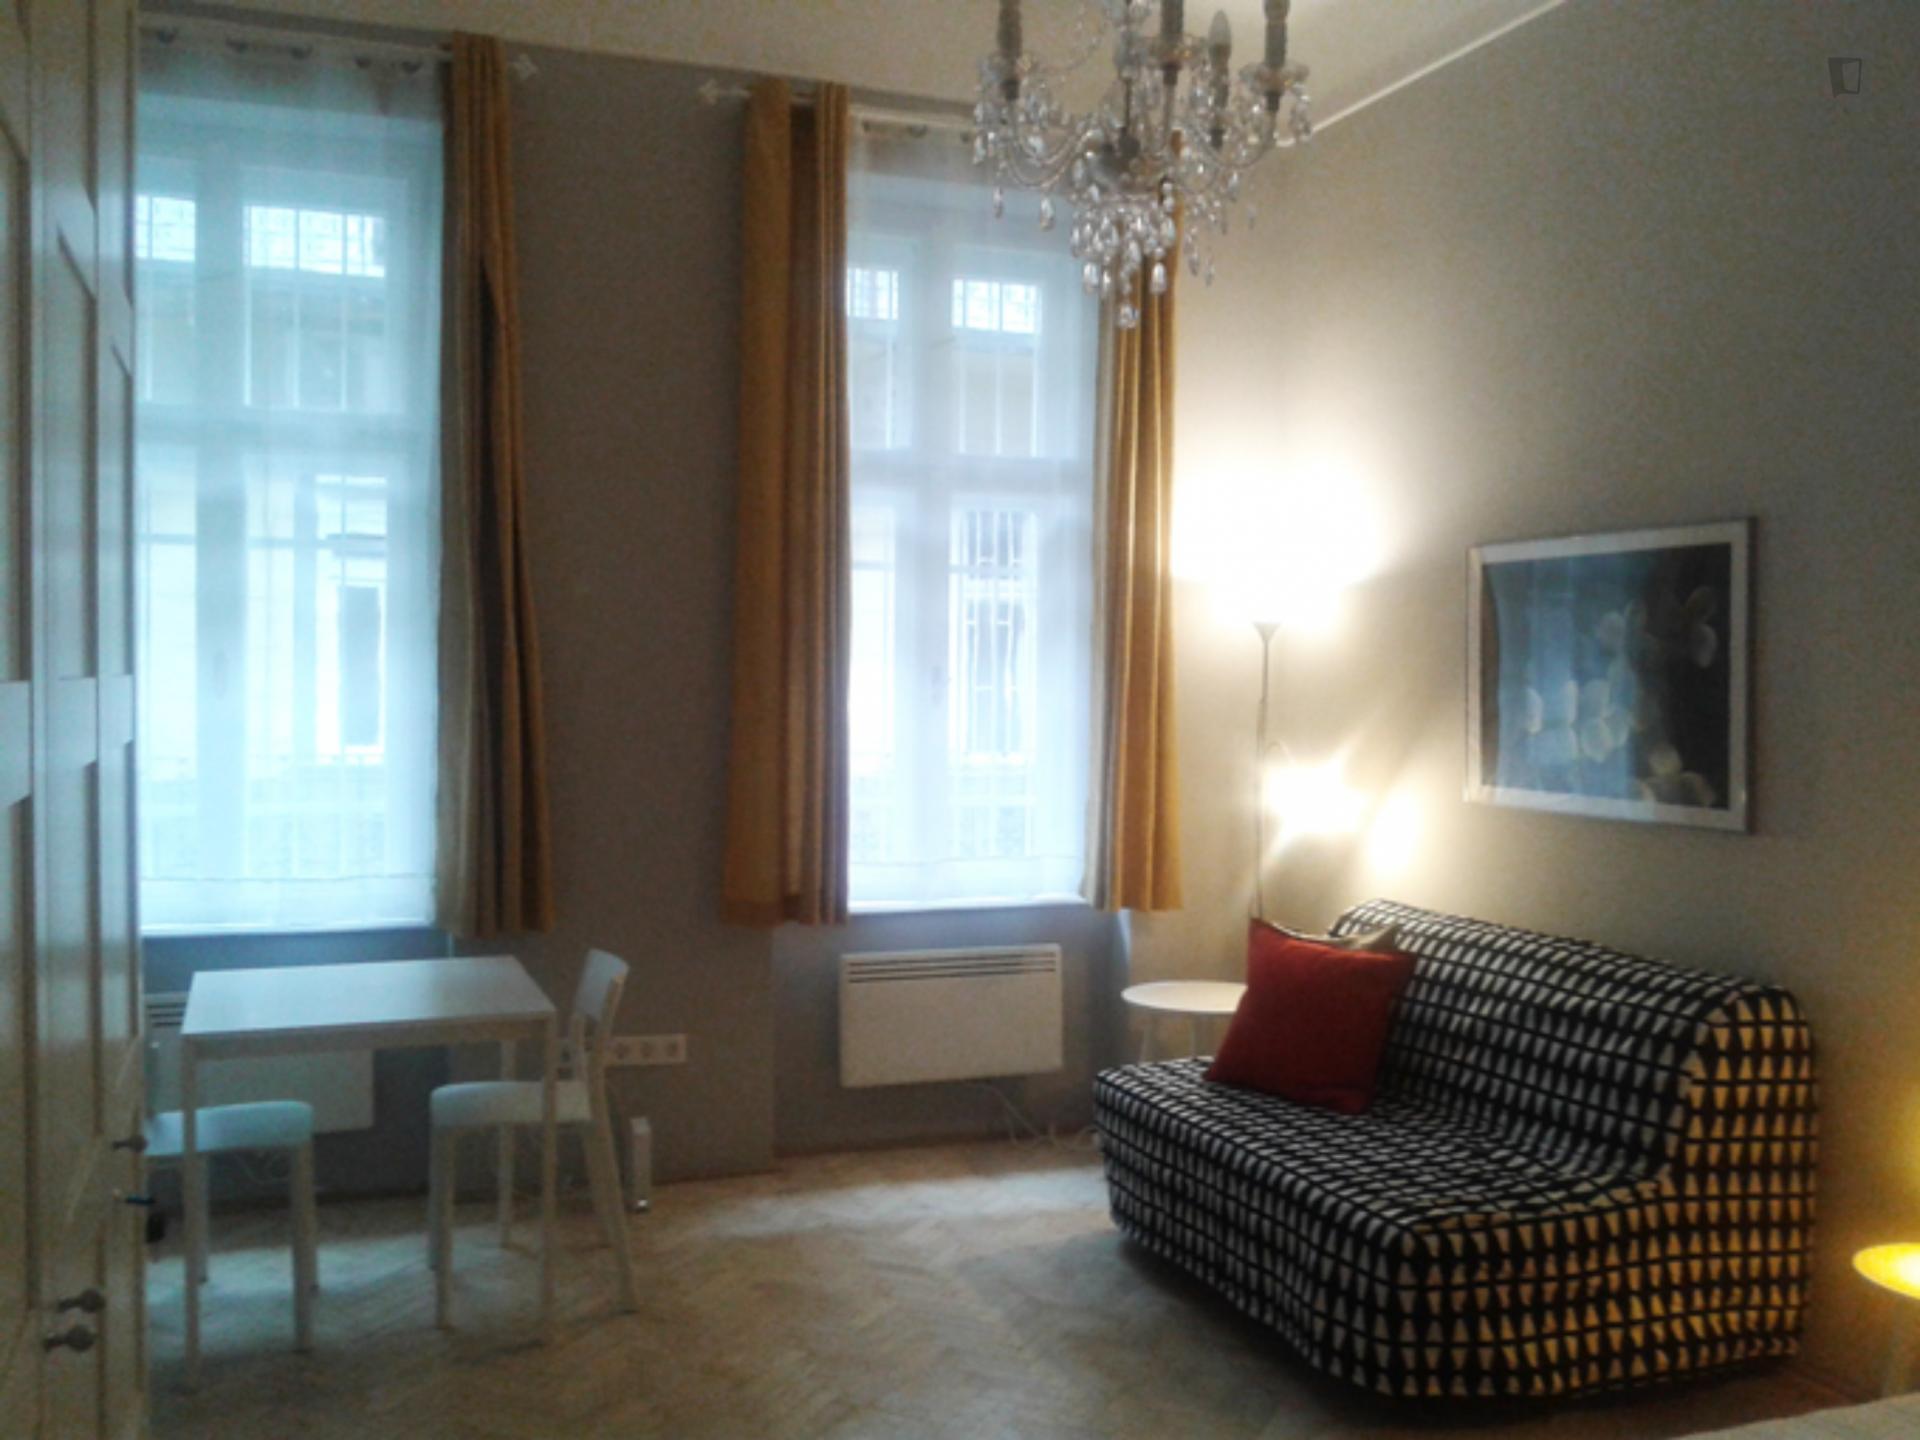 Lujza - One bedroom flat in Budapest